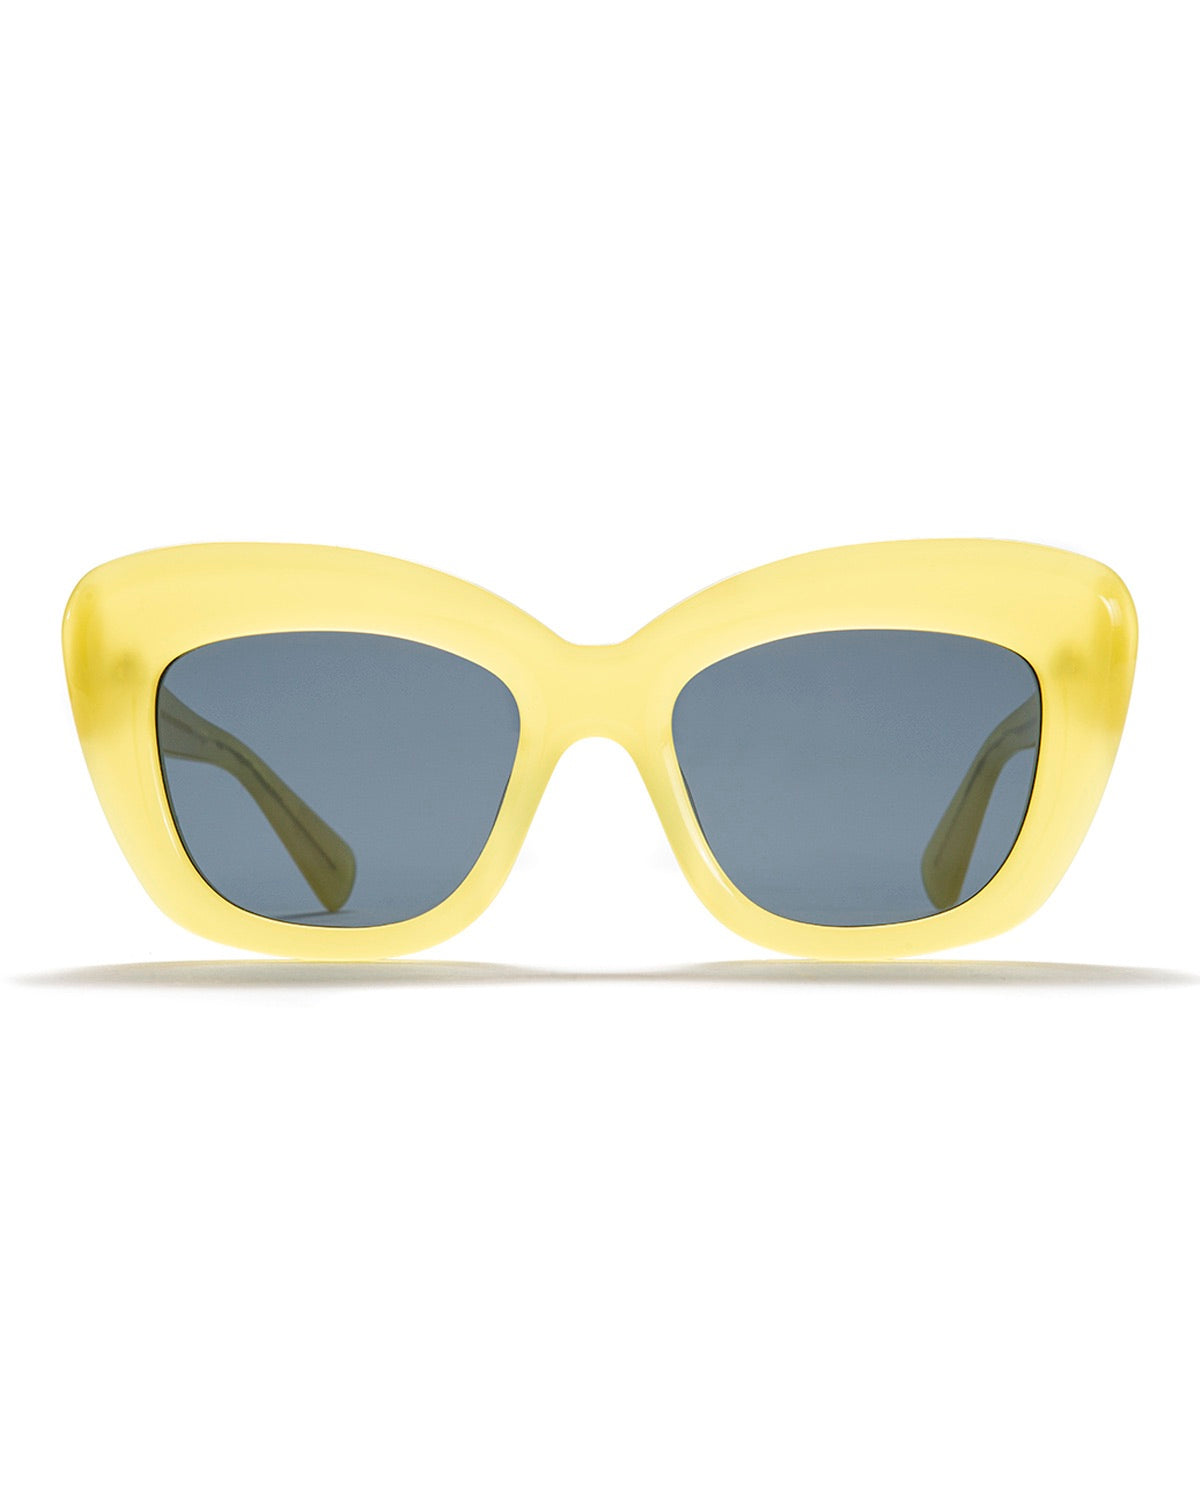 Chibi Sunglasses - Translucent Yellow 1